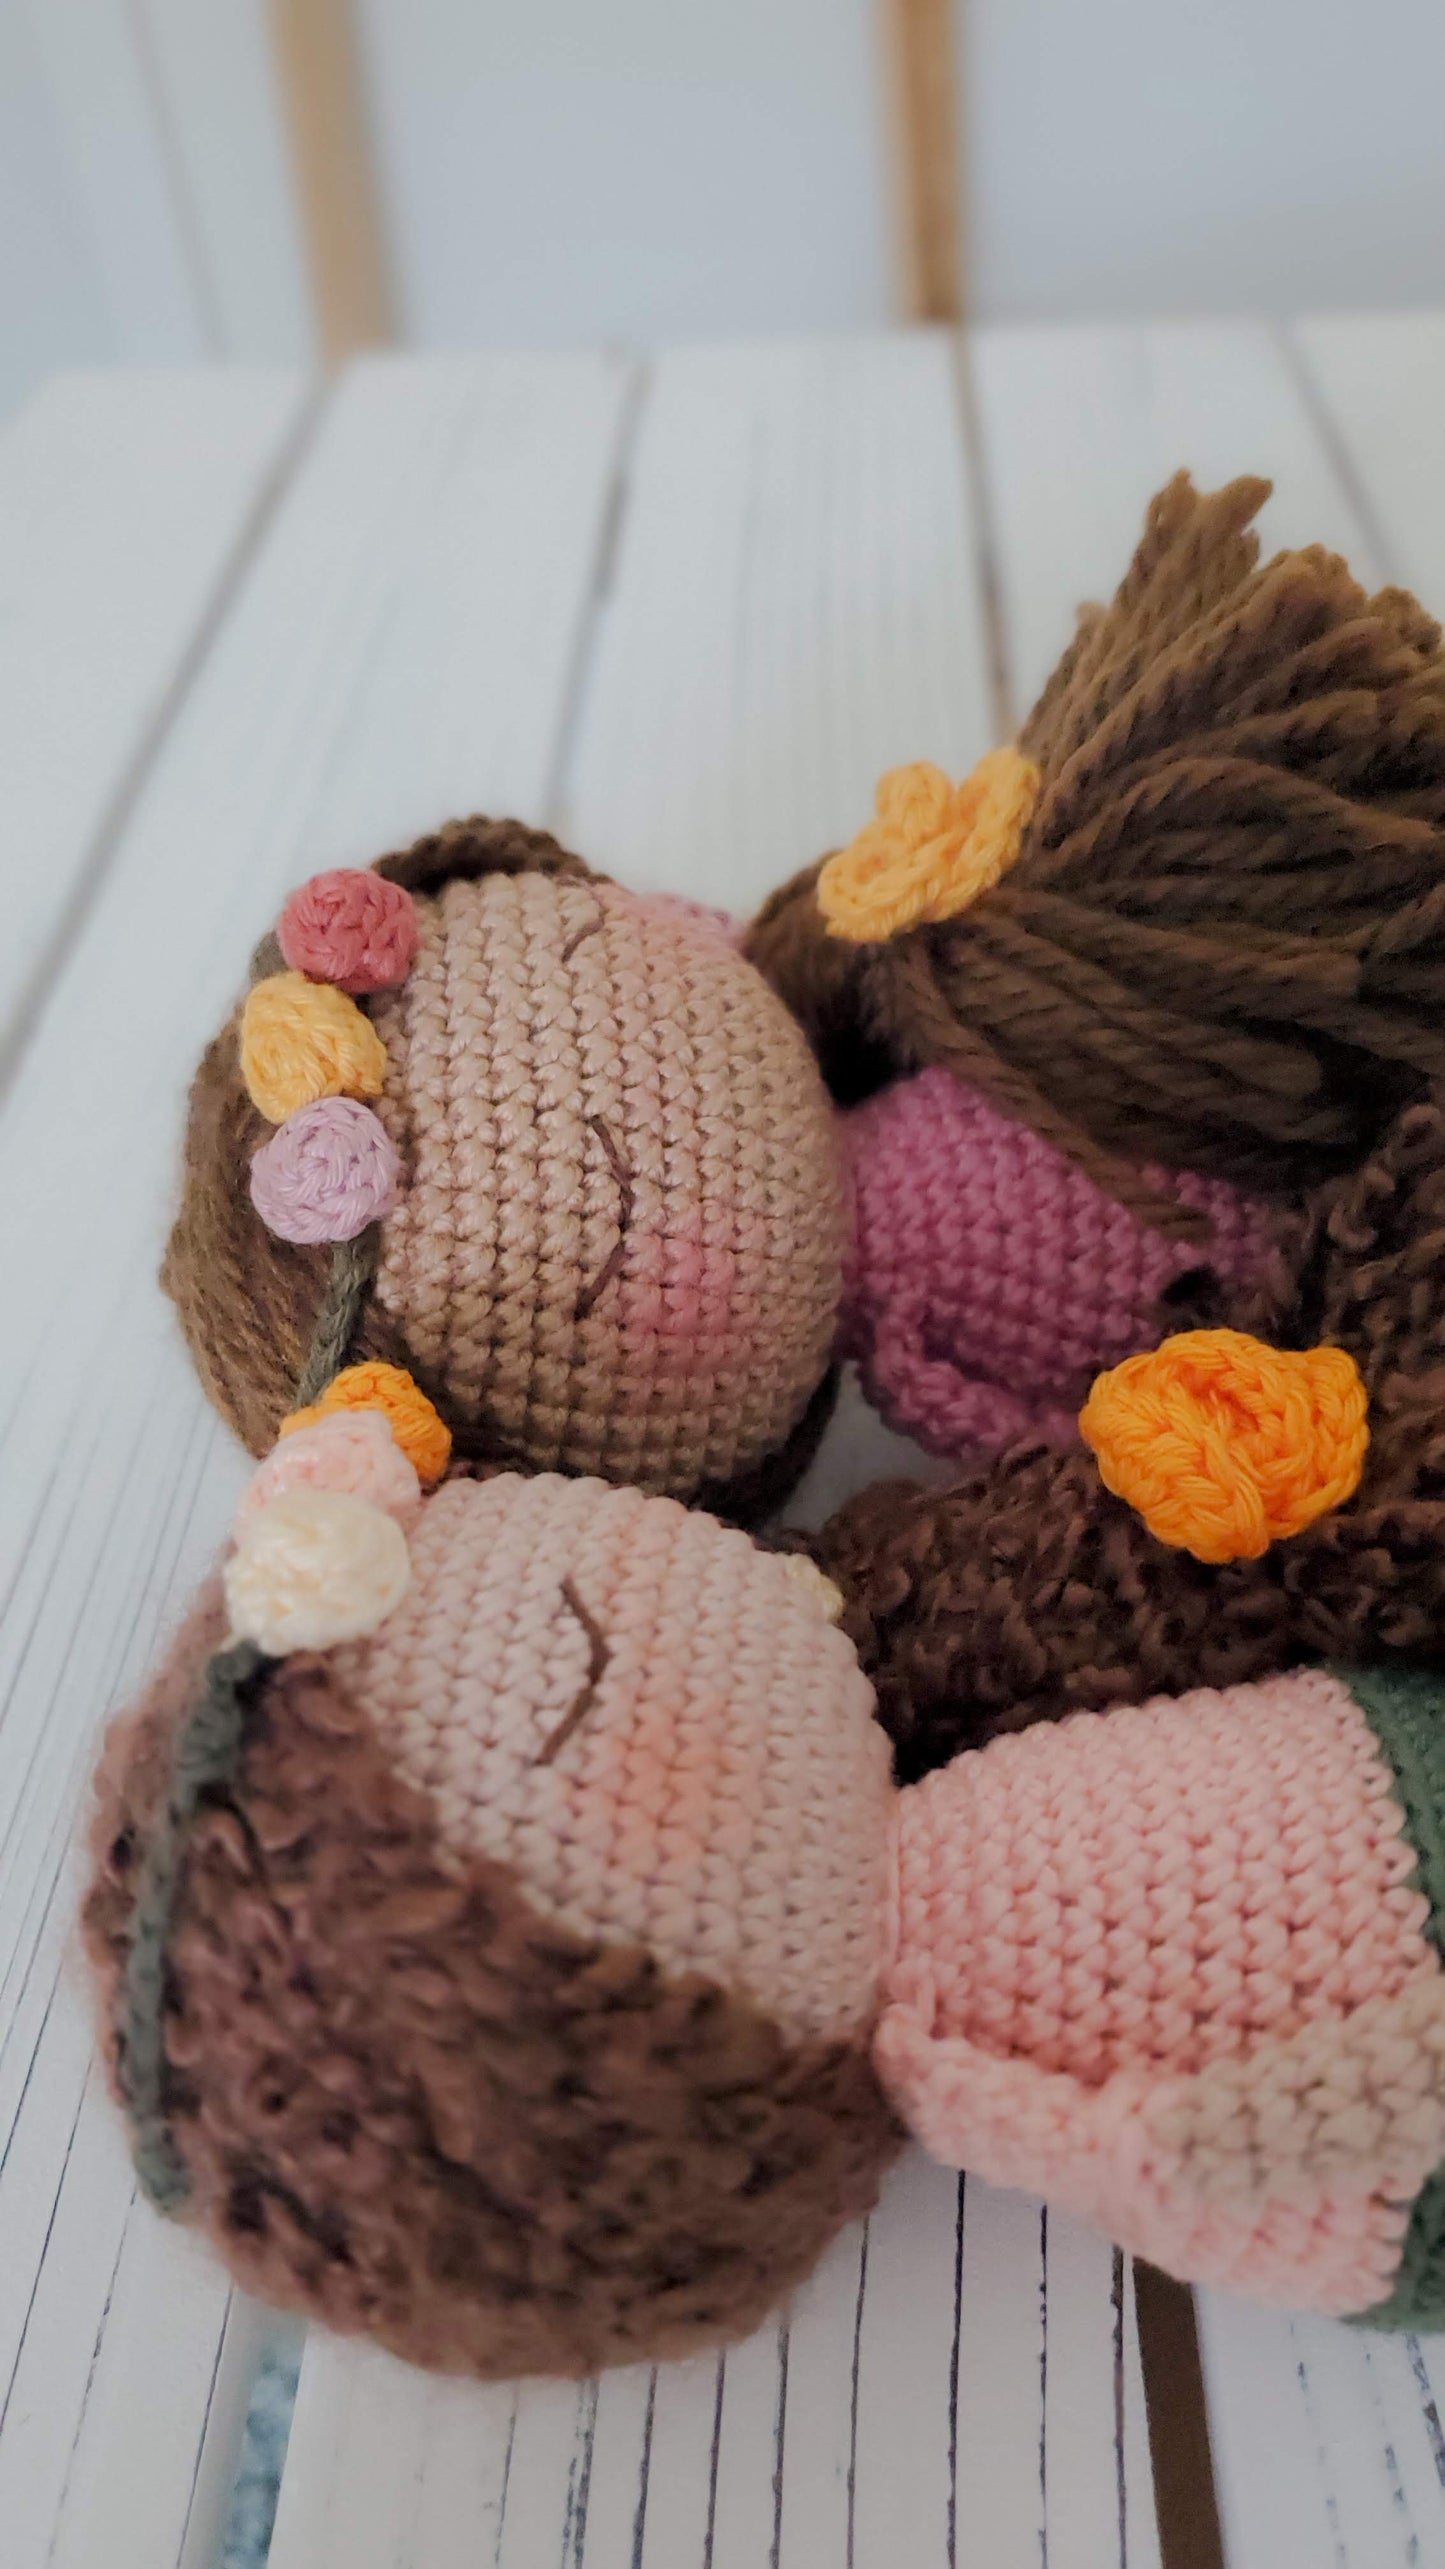 Handmade Meditating Girl / Crochet Doll